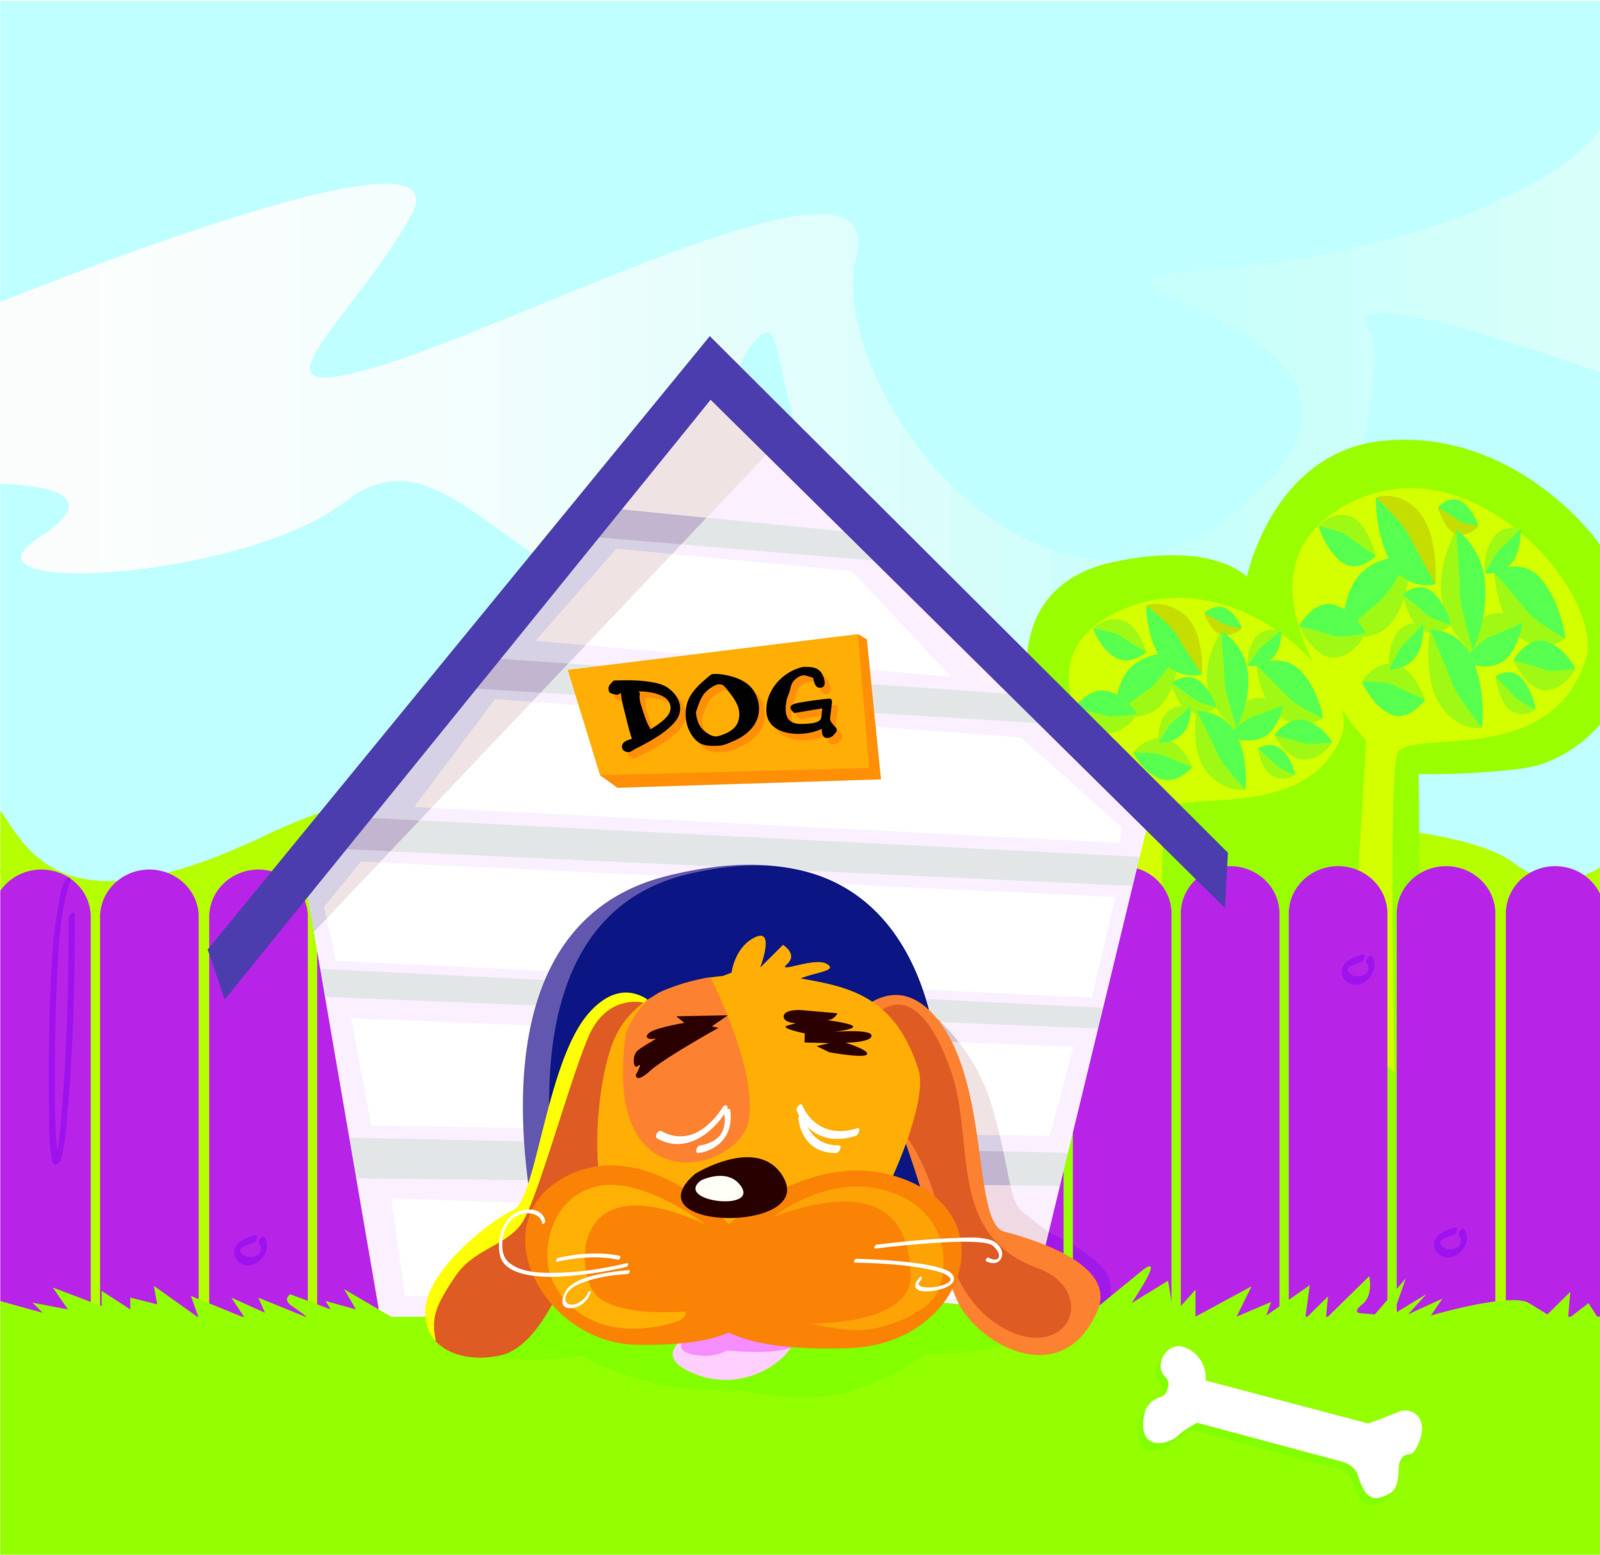 Dog sleeping in dog house by Lordalea